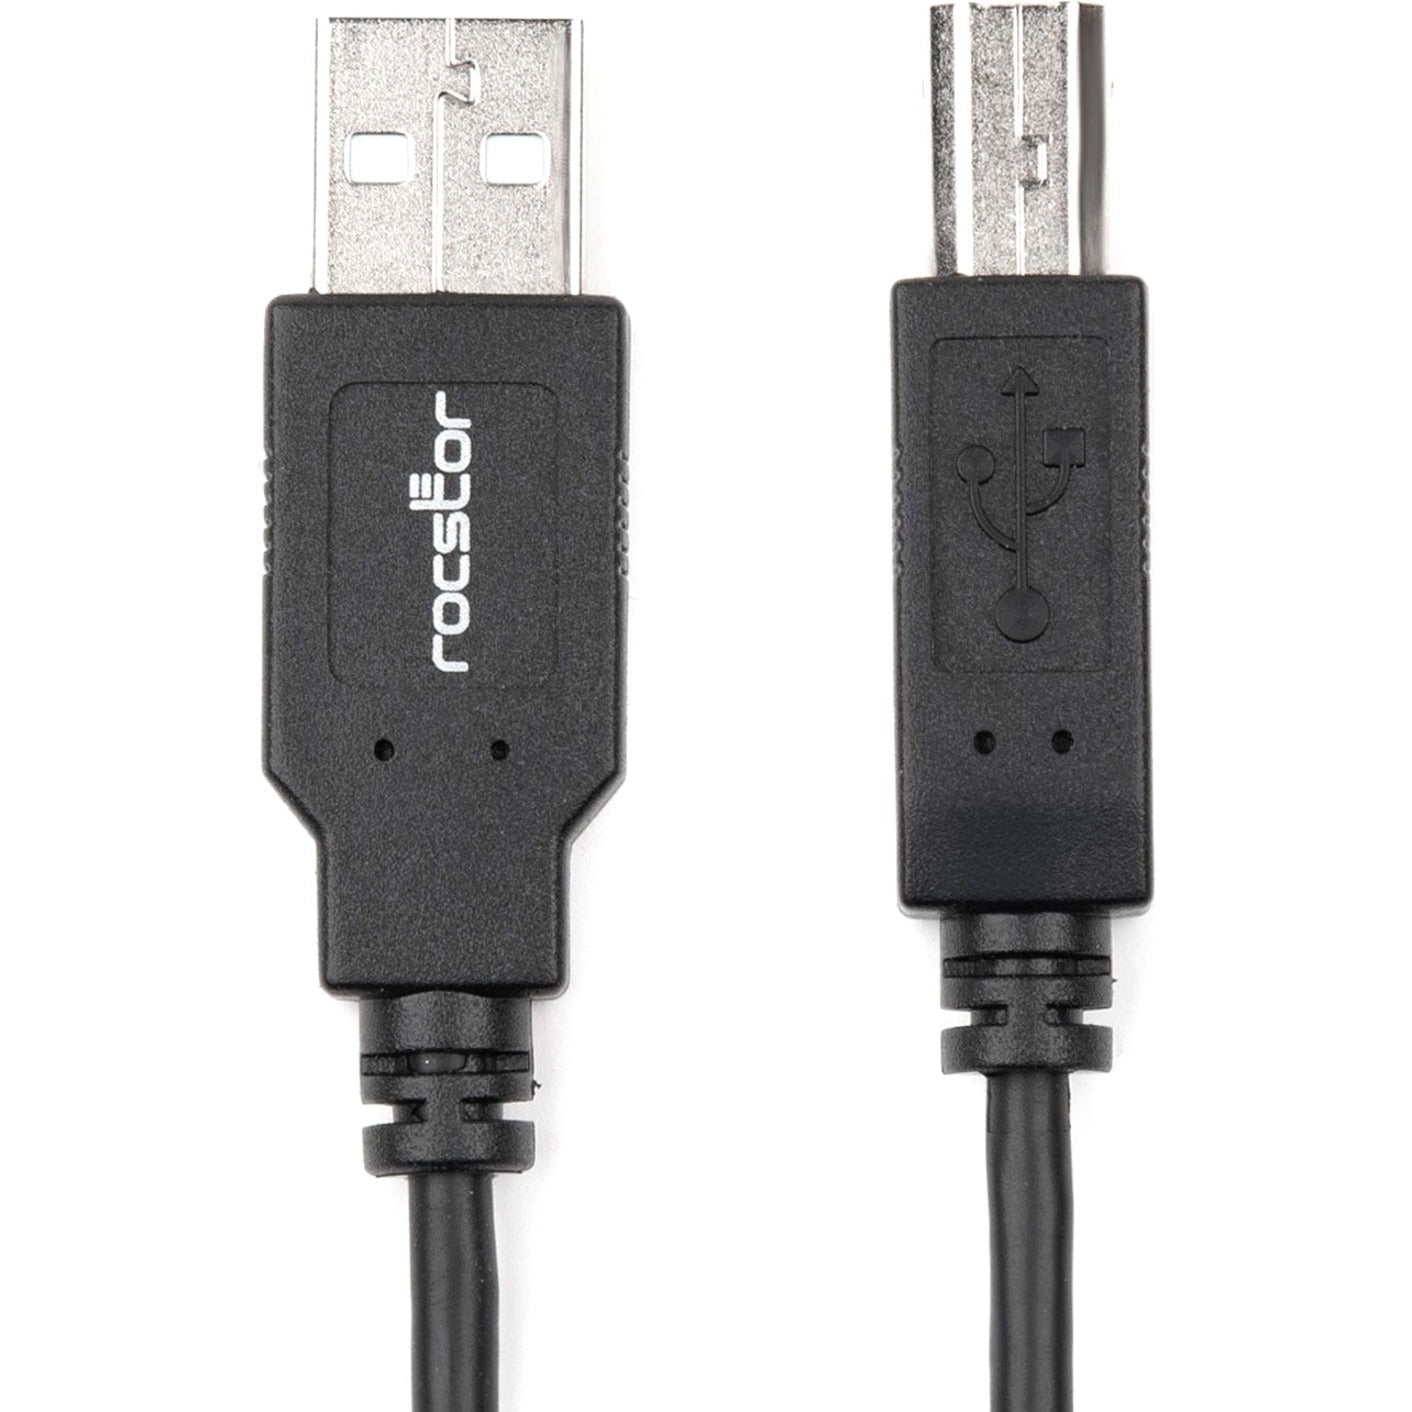 Marca: Rocstor Cable de transferencia de datos Premium de 10 pies USB 2.0 Tipo-A a Tipo-B - M/M Cable de Datos